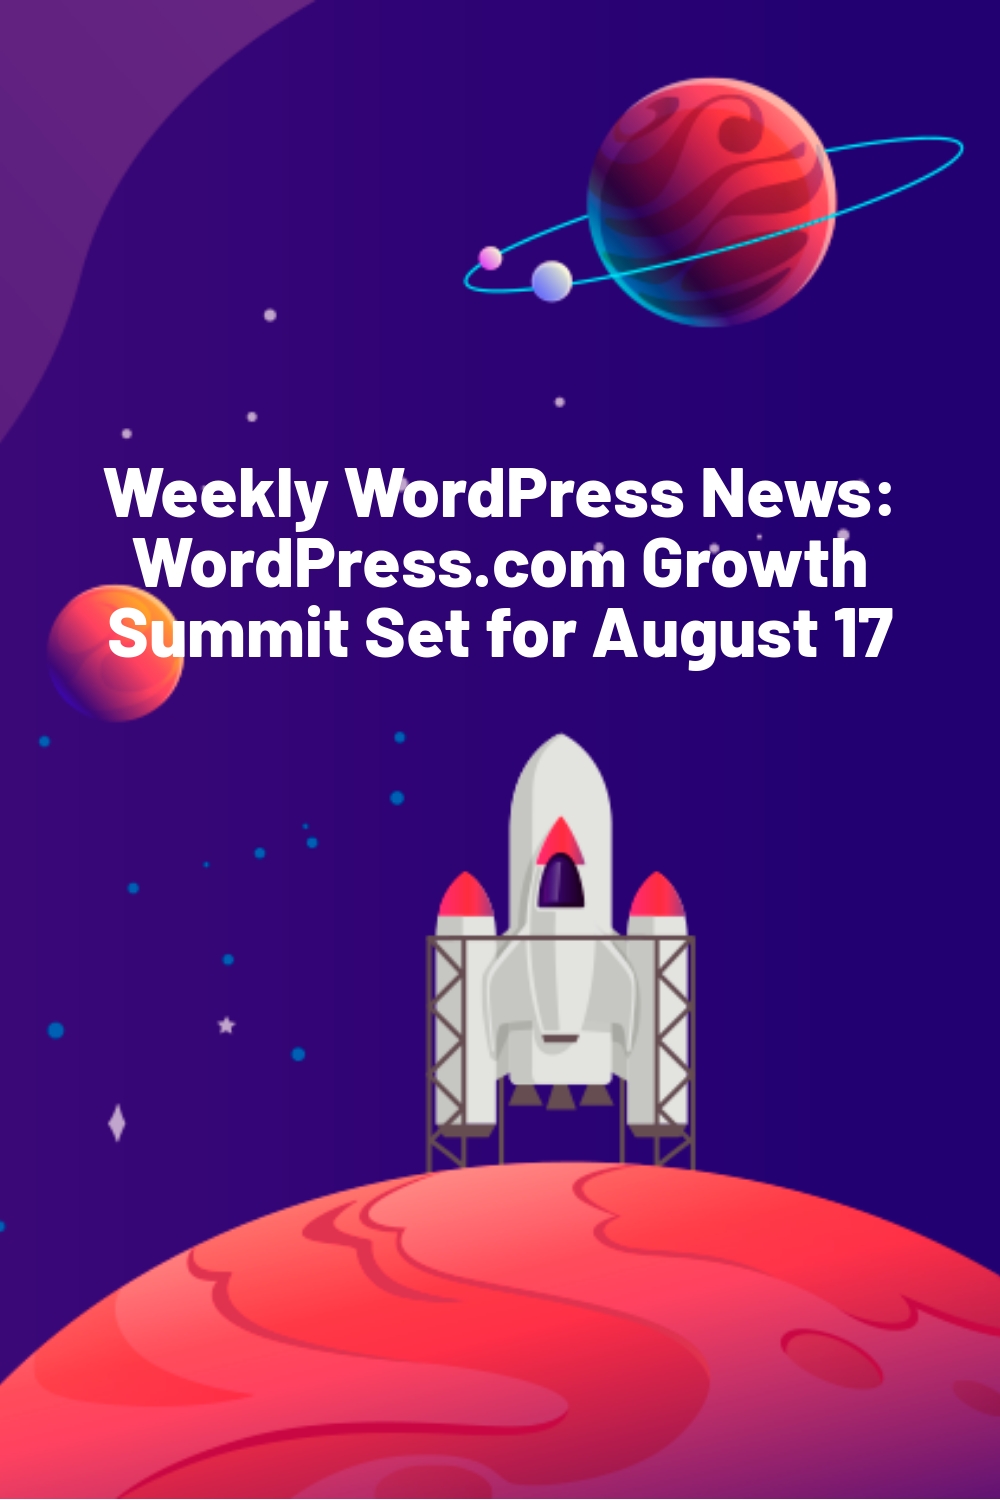 Weekly WordPress News: WordPress.com Growth Summit Set for August 17